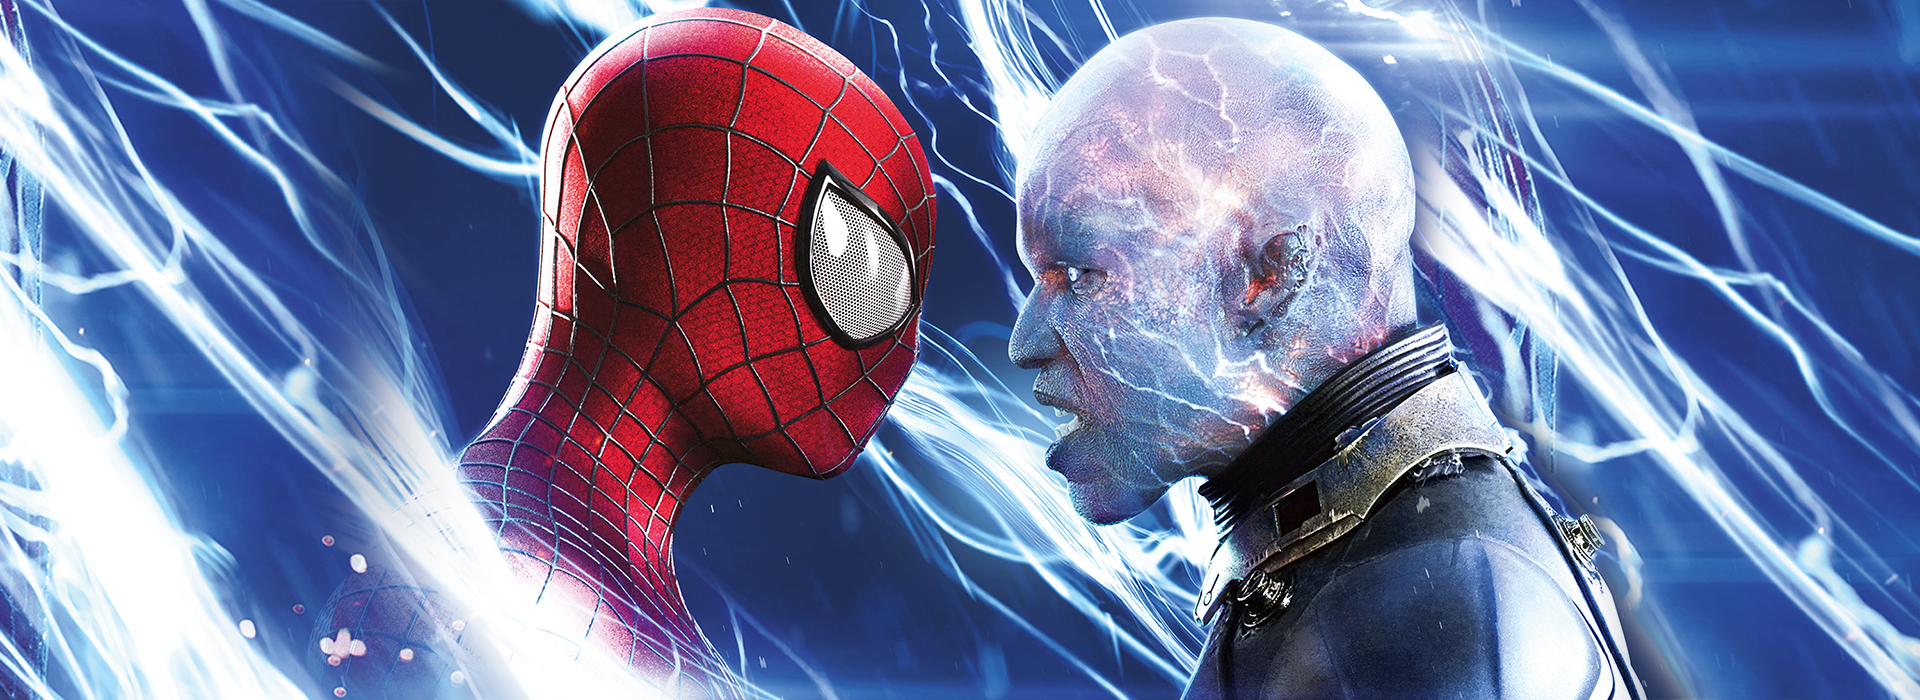 Movie poster The Amazing Spider-man 2